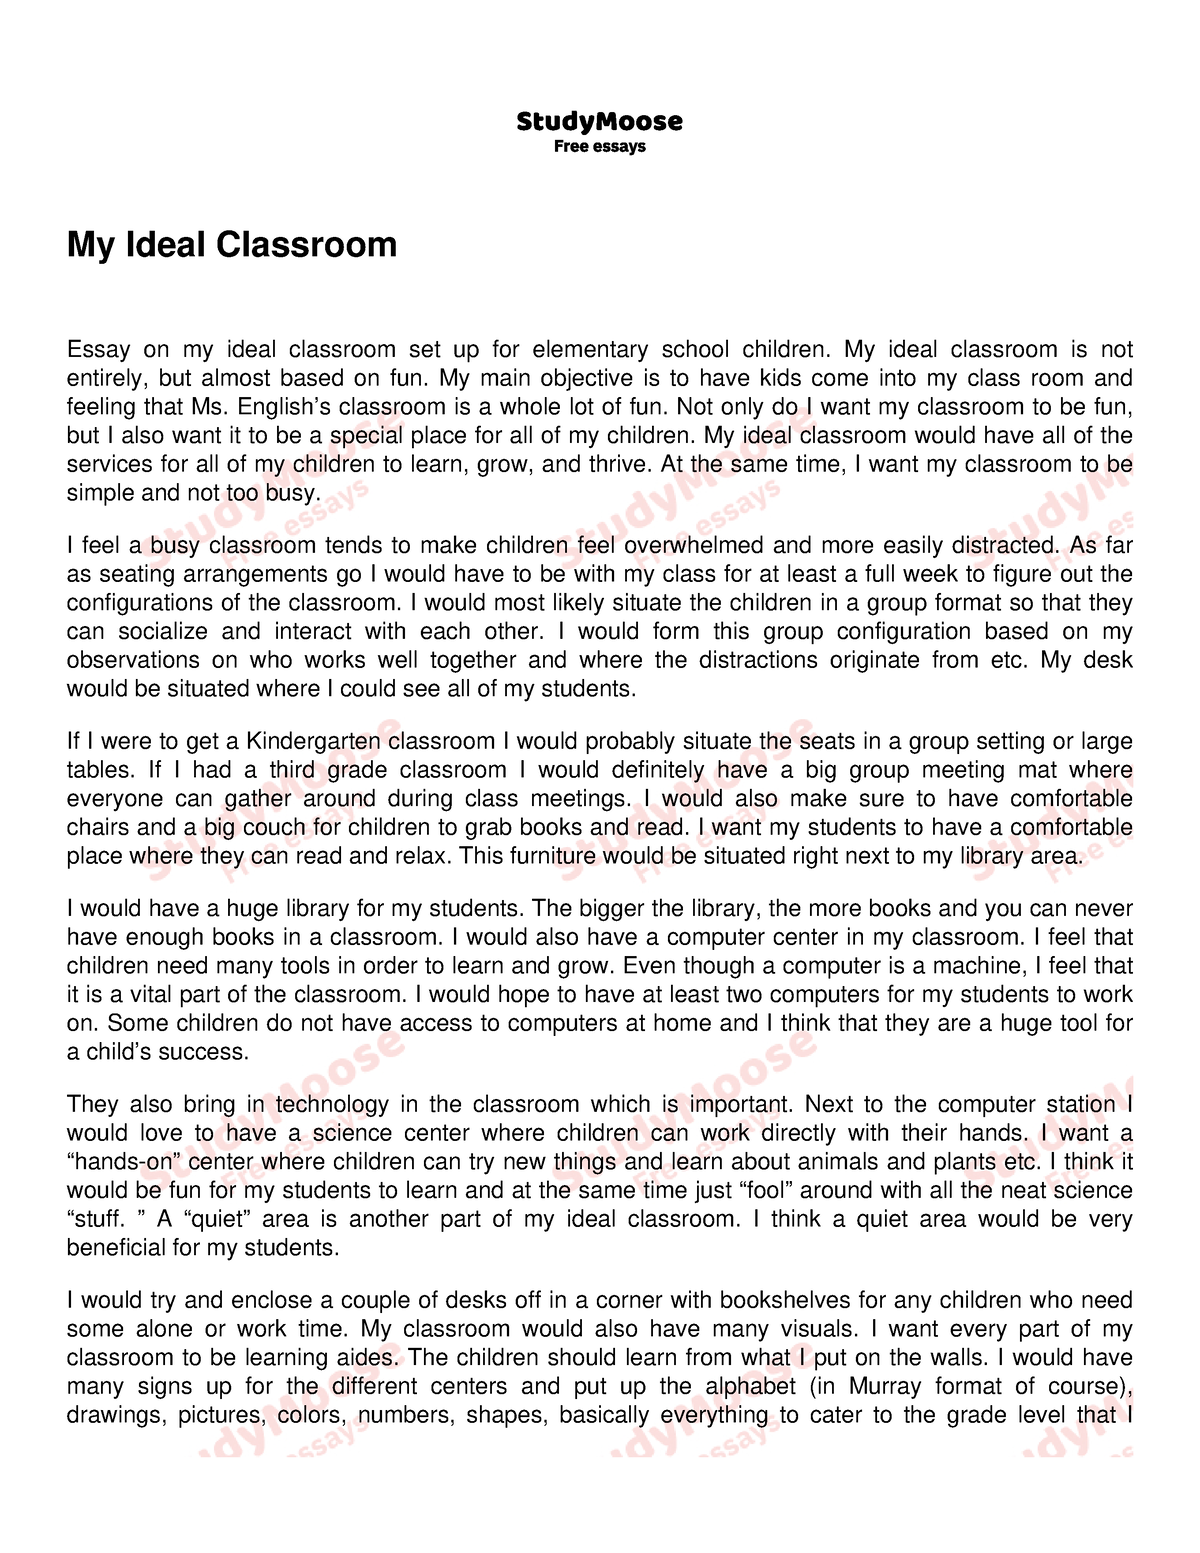 the ideal classroom essay